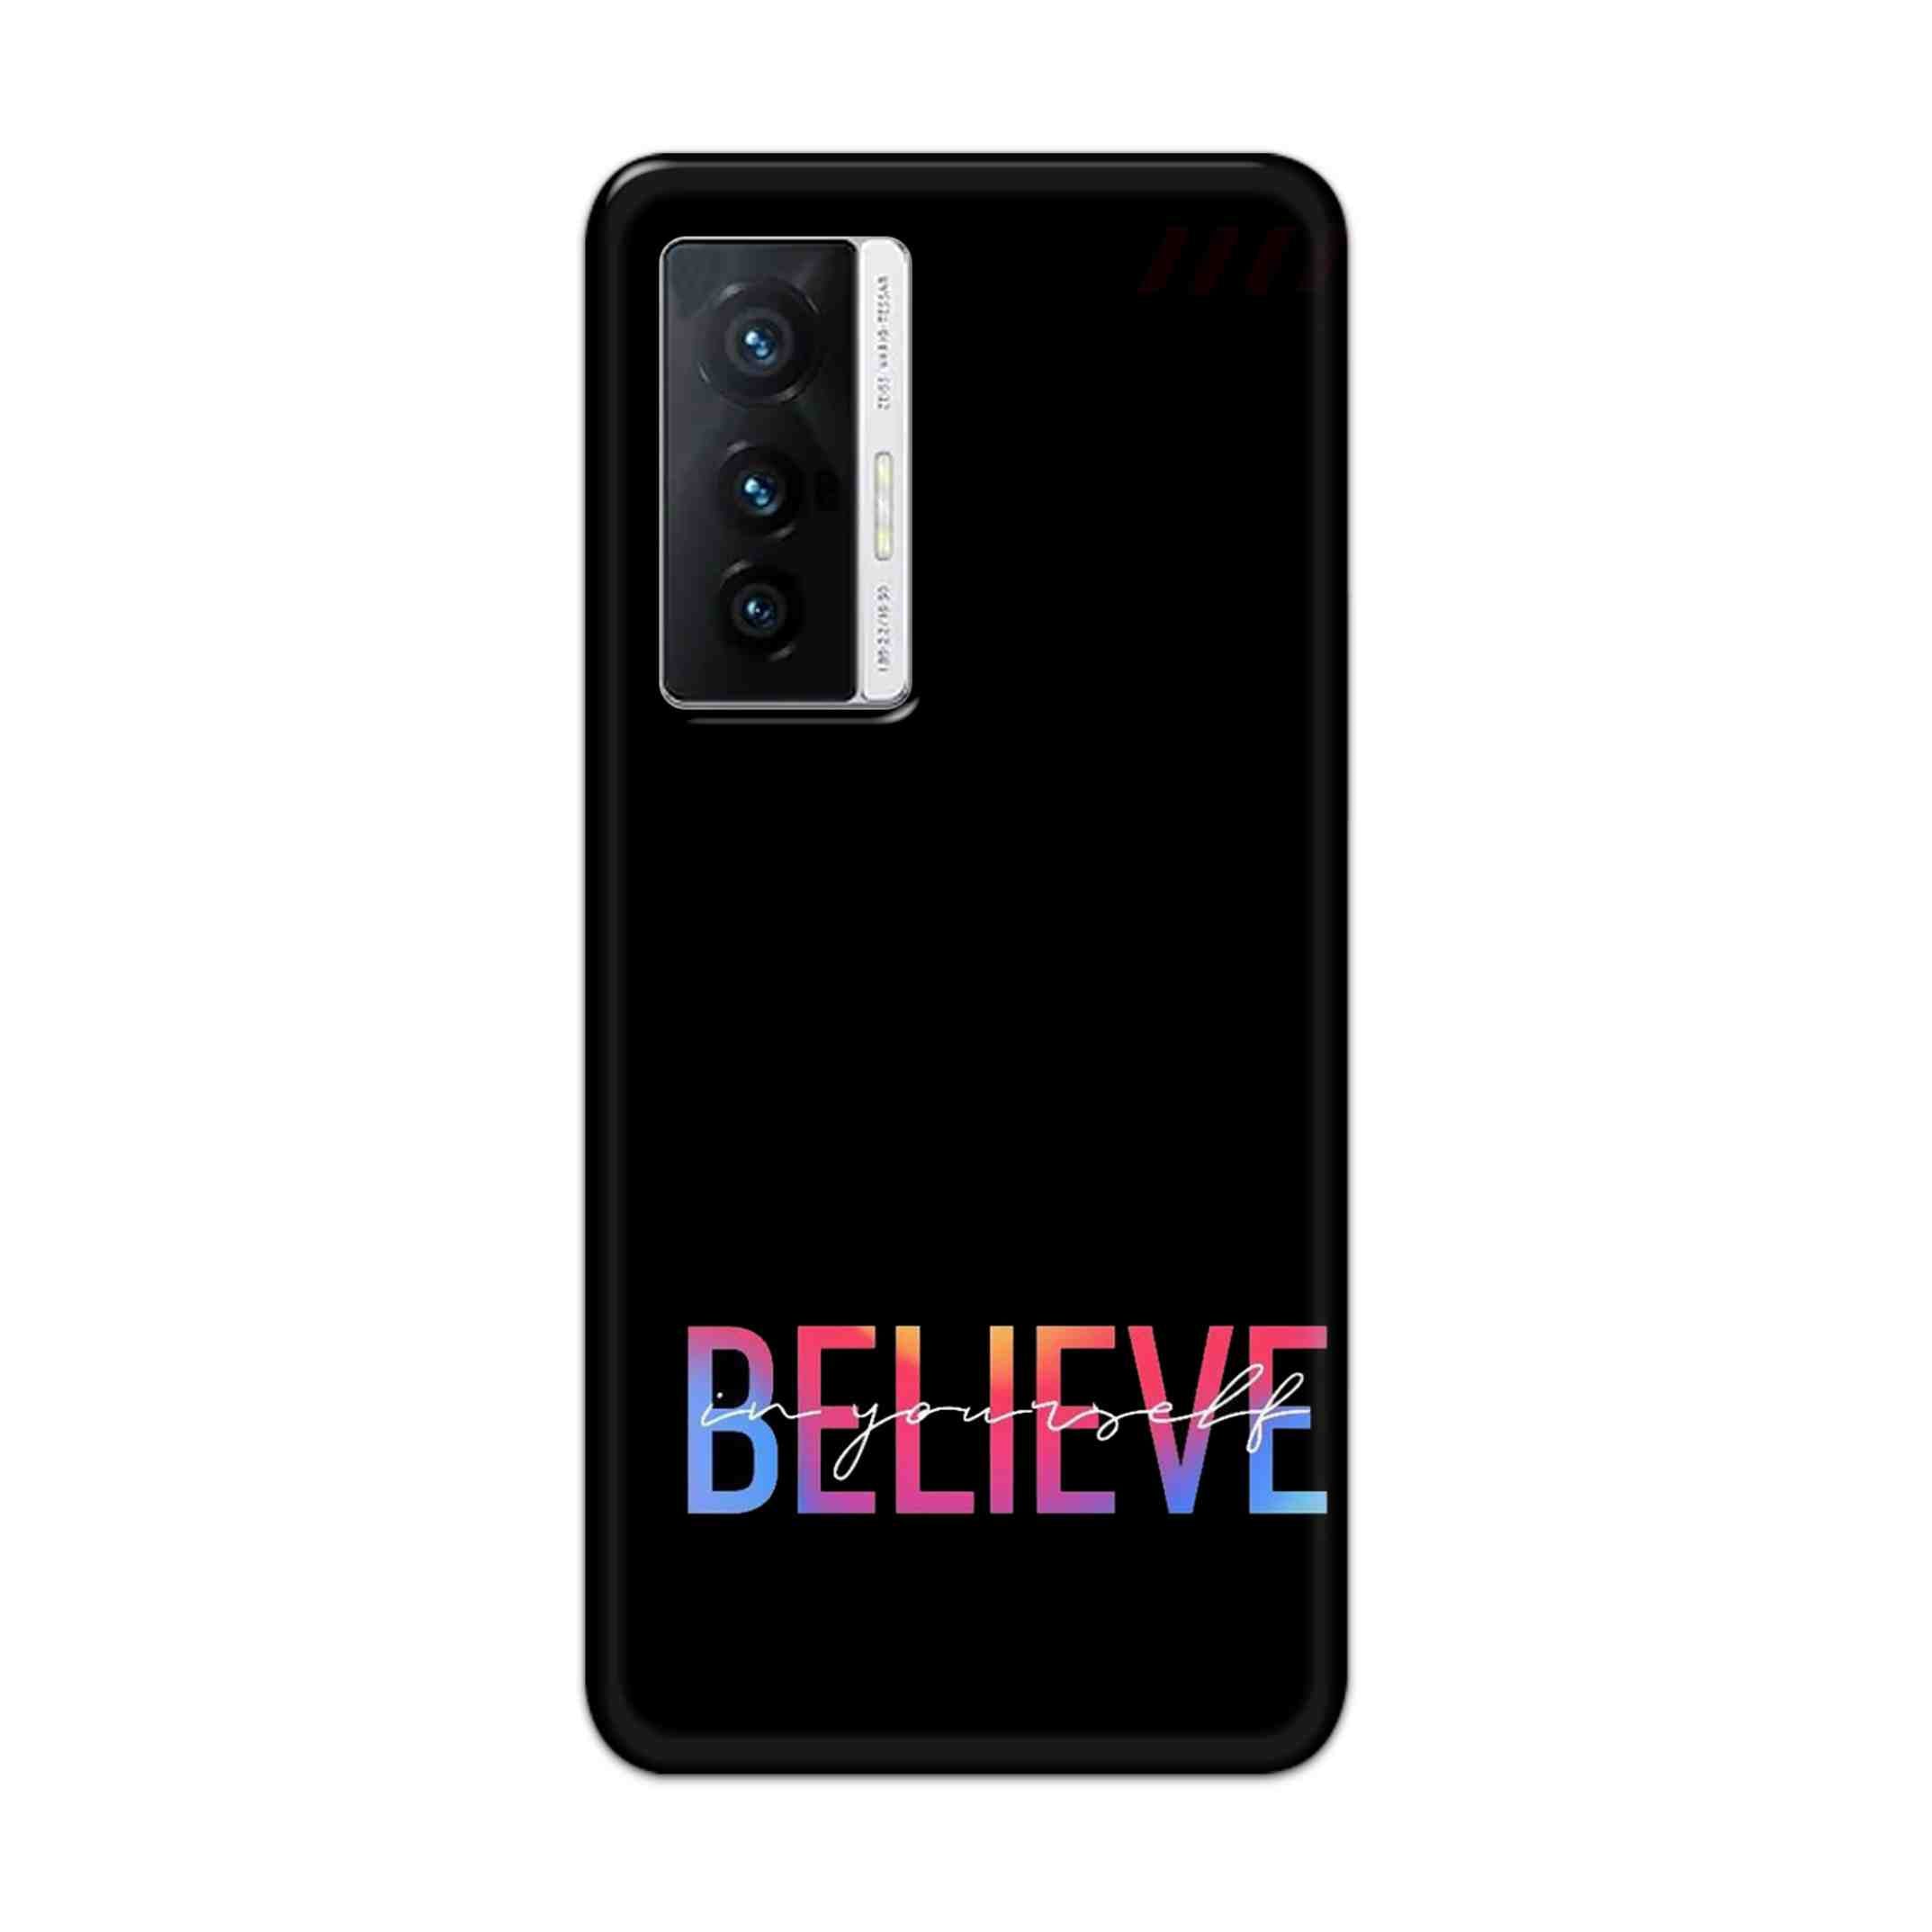 Buy Believe Hard Back Mobile Phone Case Cover For Vivo X70 Online